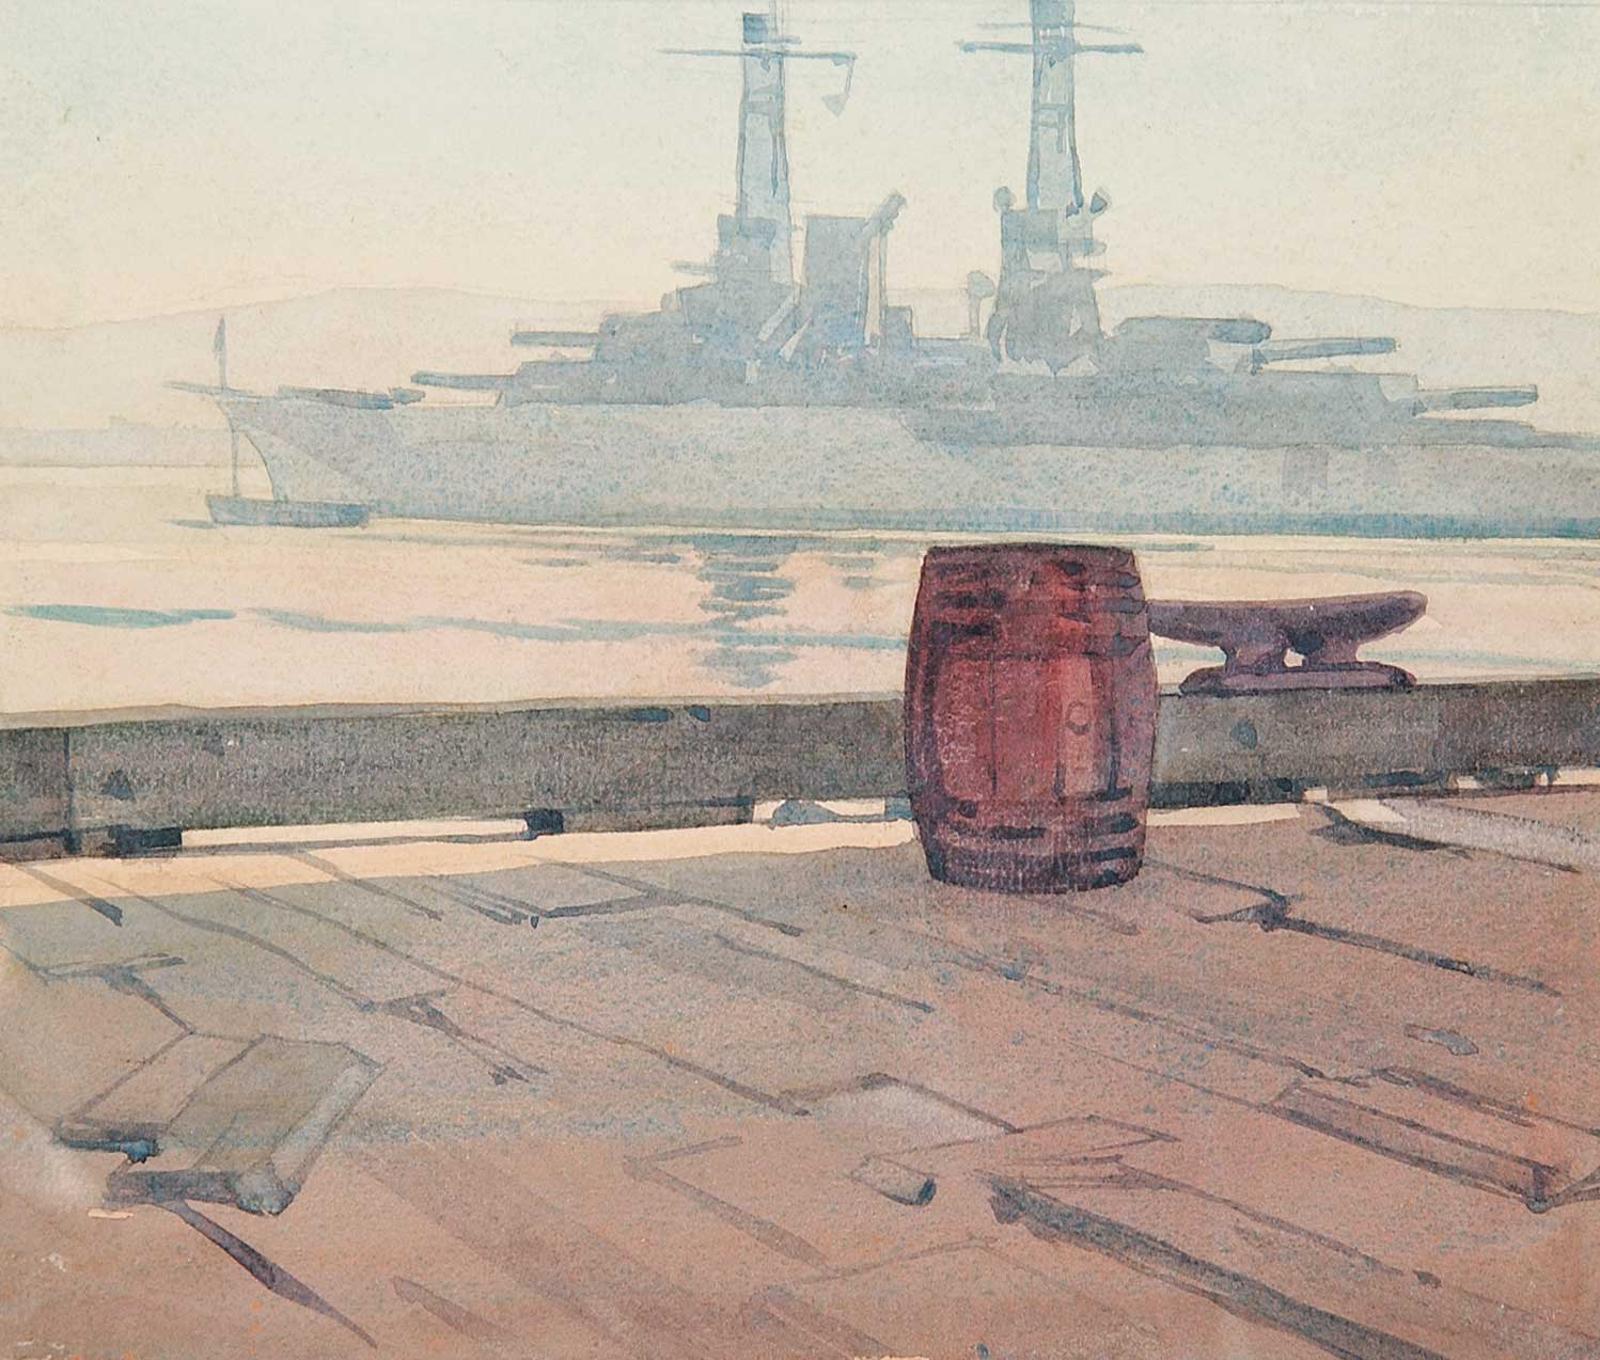 James Mercer - Untitled - War Ship in the Harbour